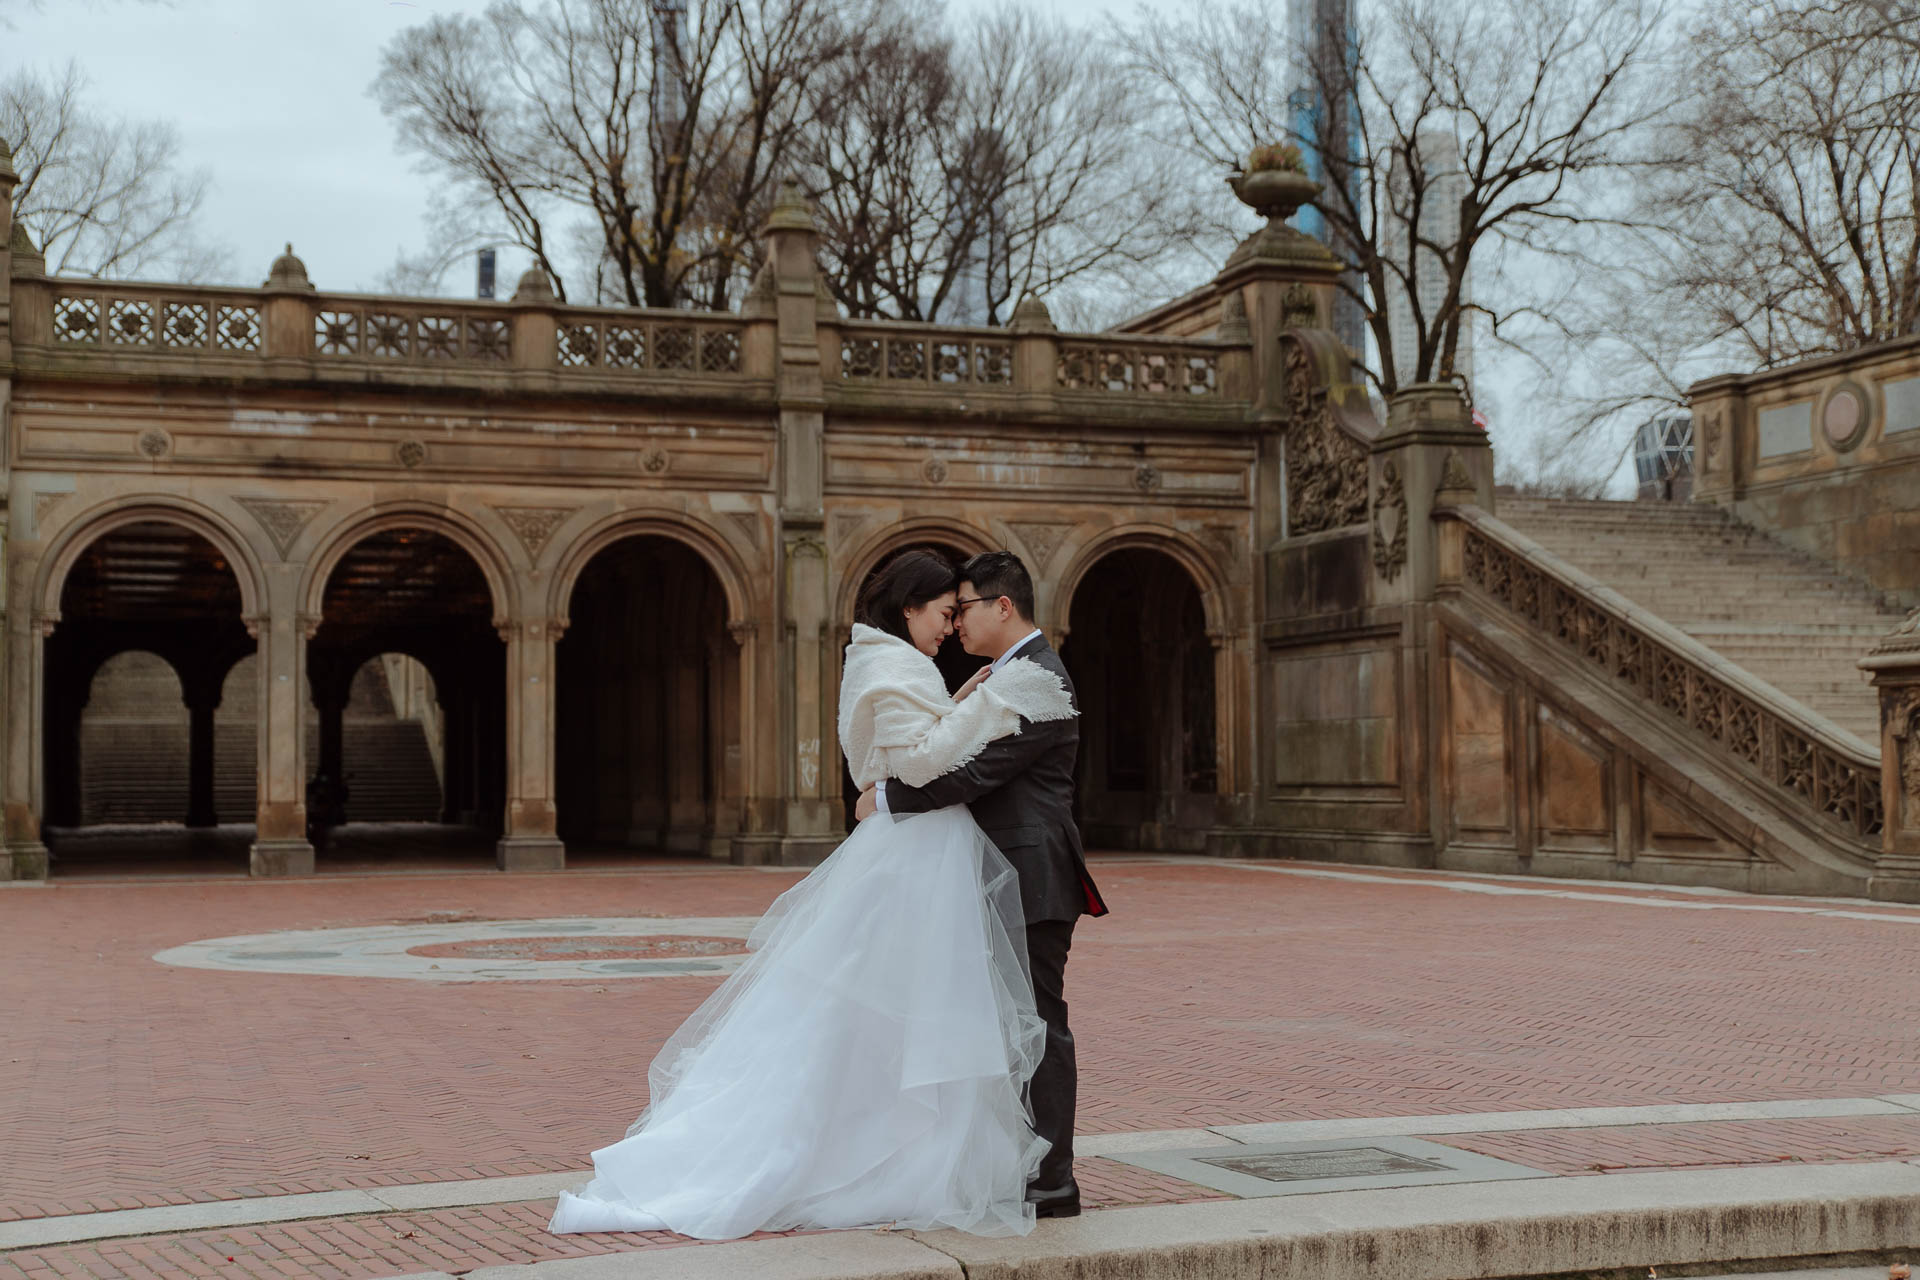 bethesda fountain wedding photoshoot in central park